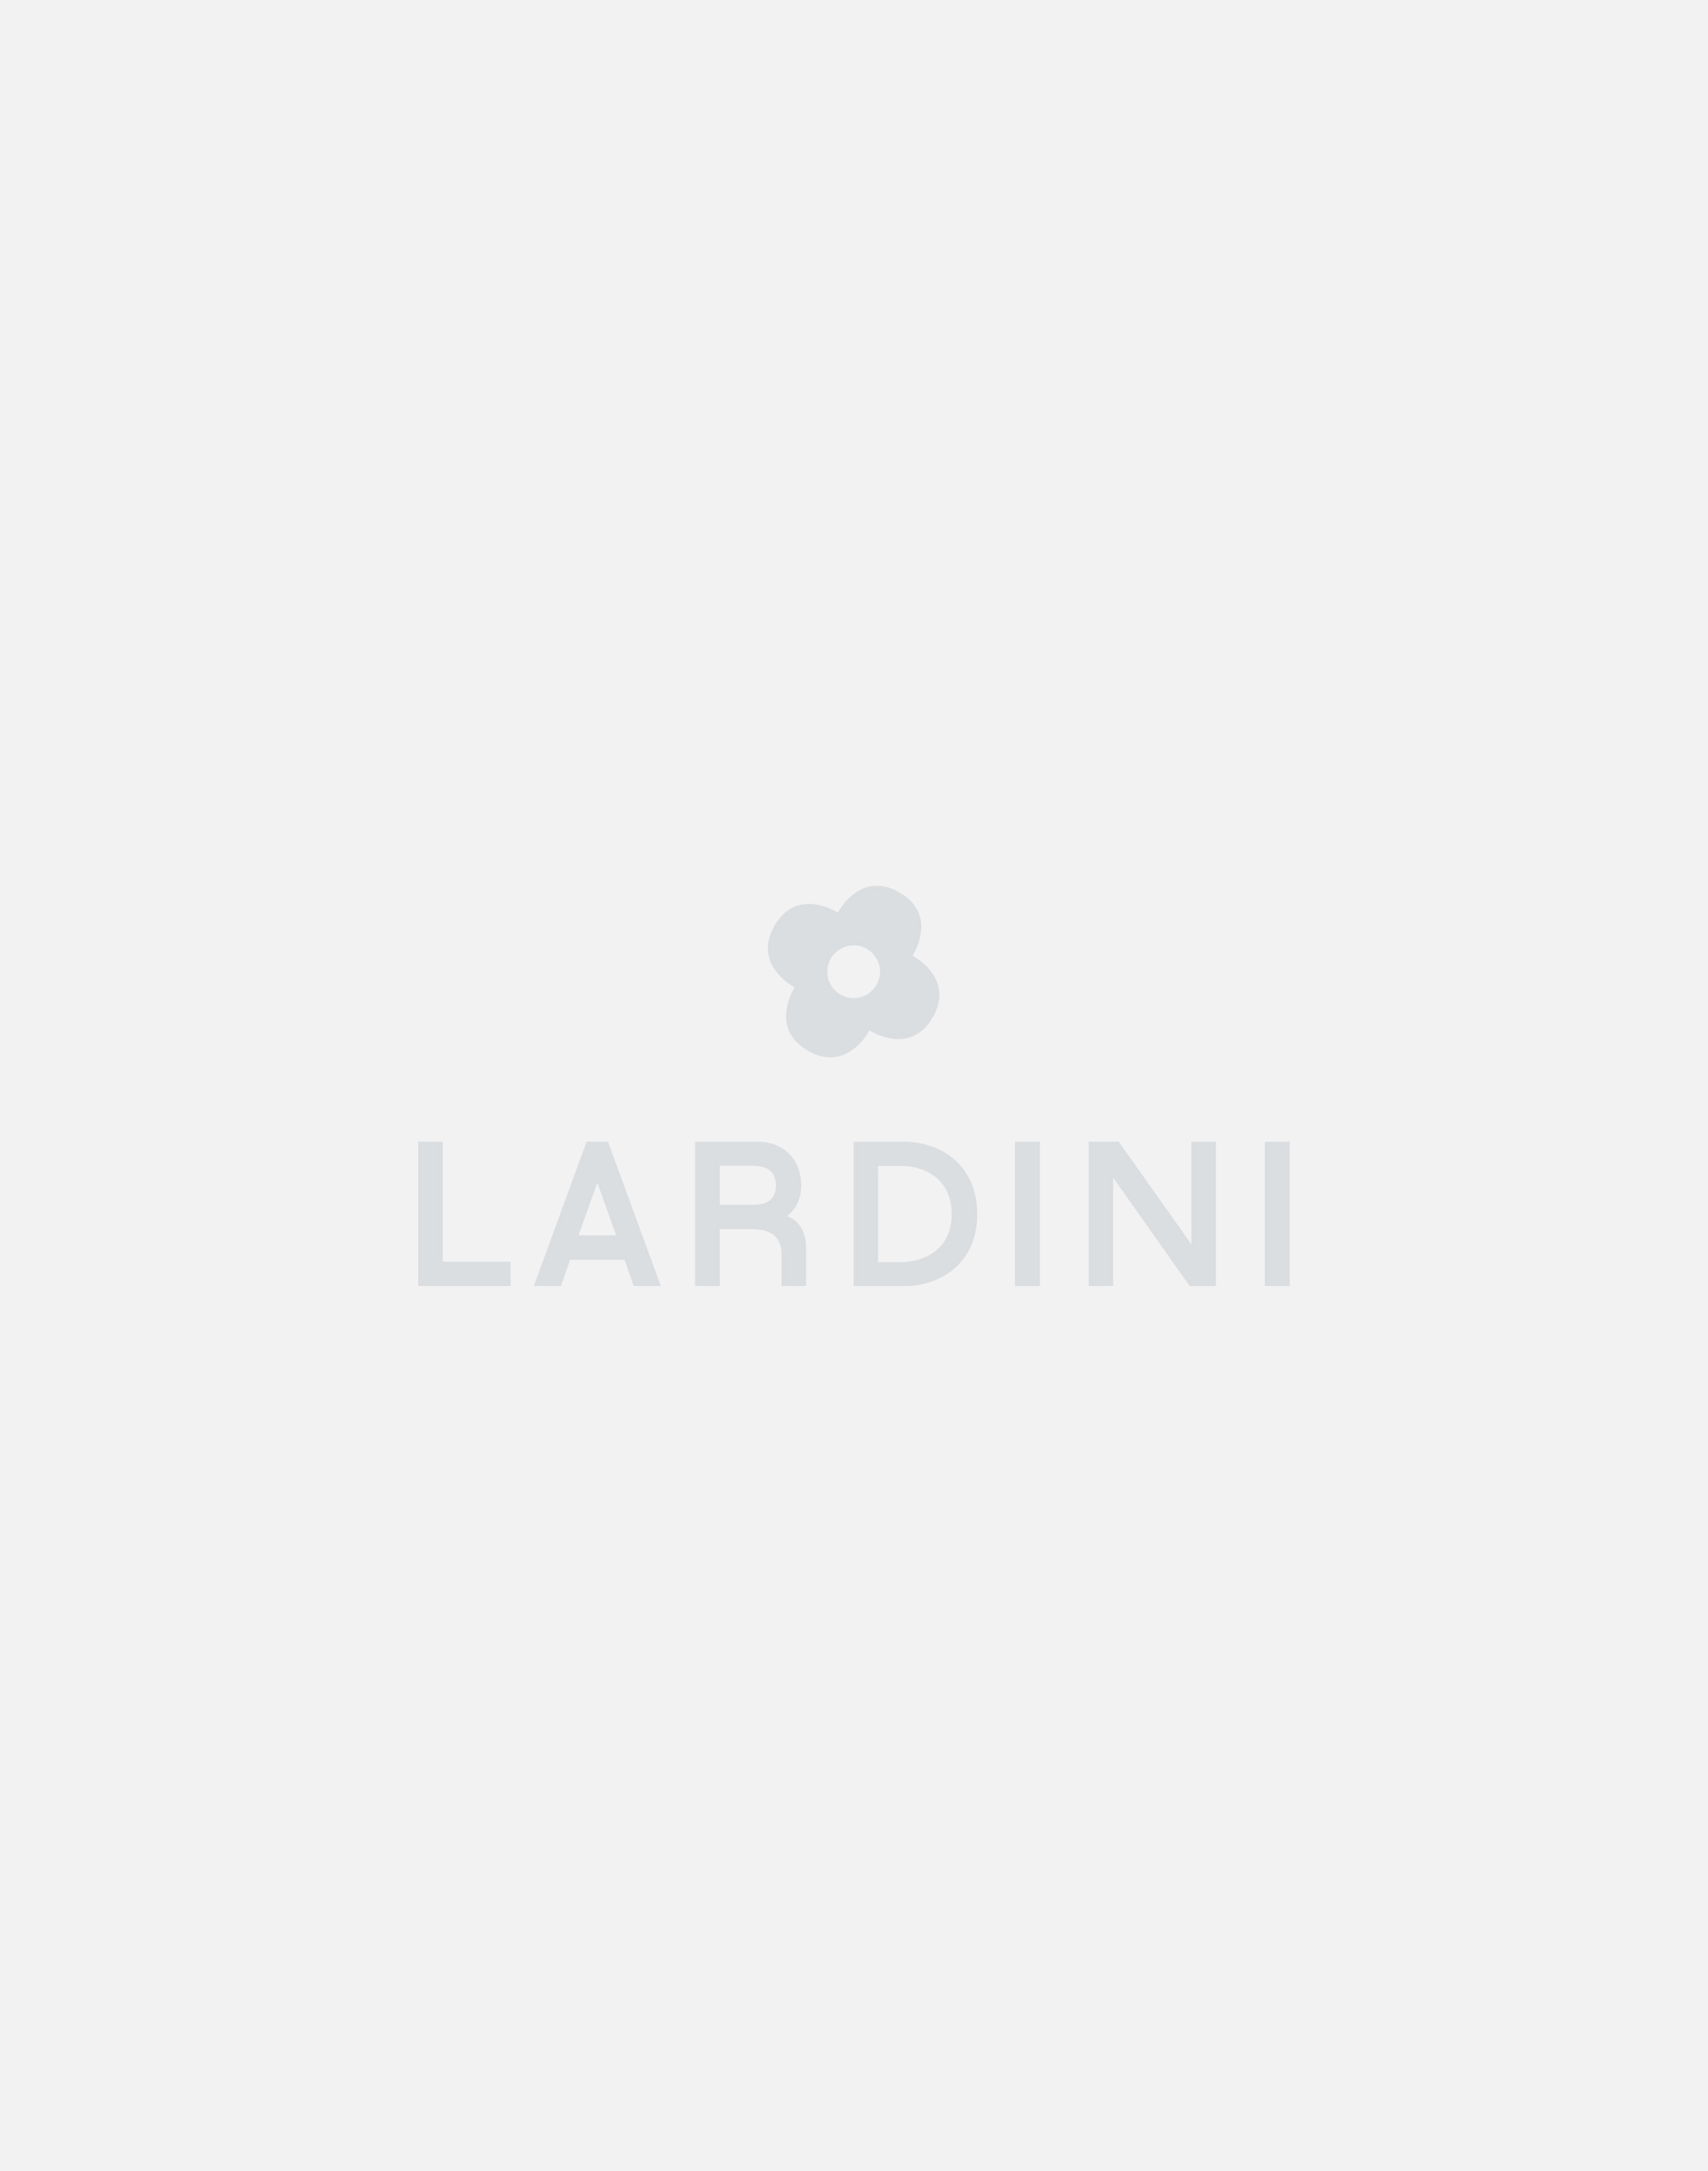 T-shirt with matching embroidery - Luigi Lardini capsule 2